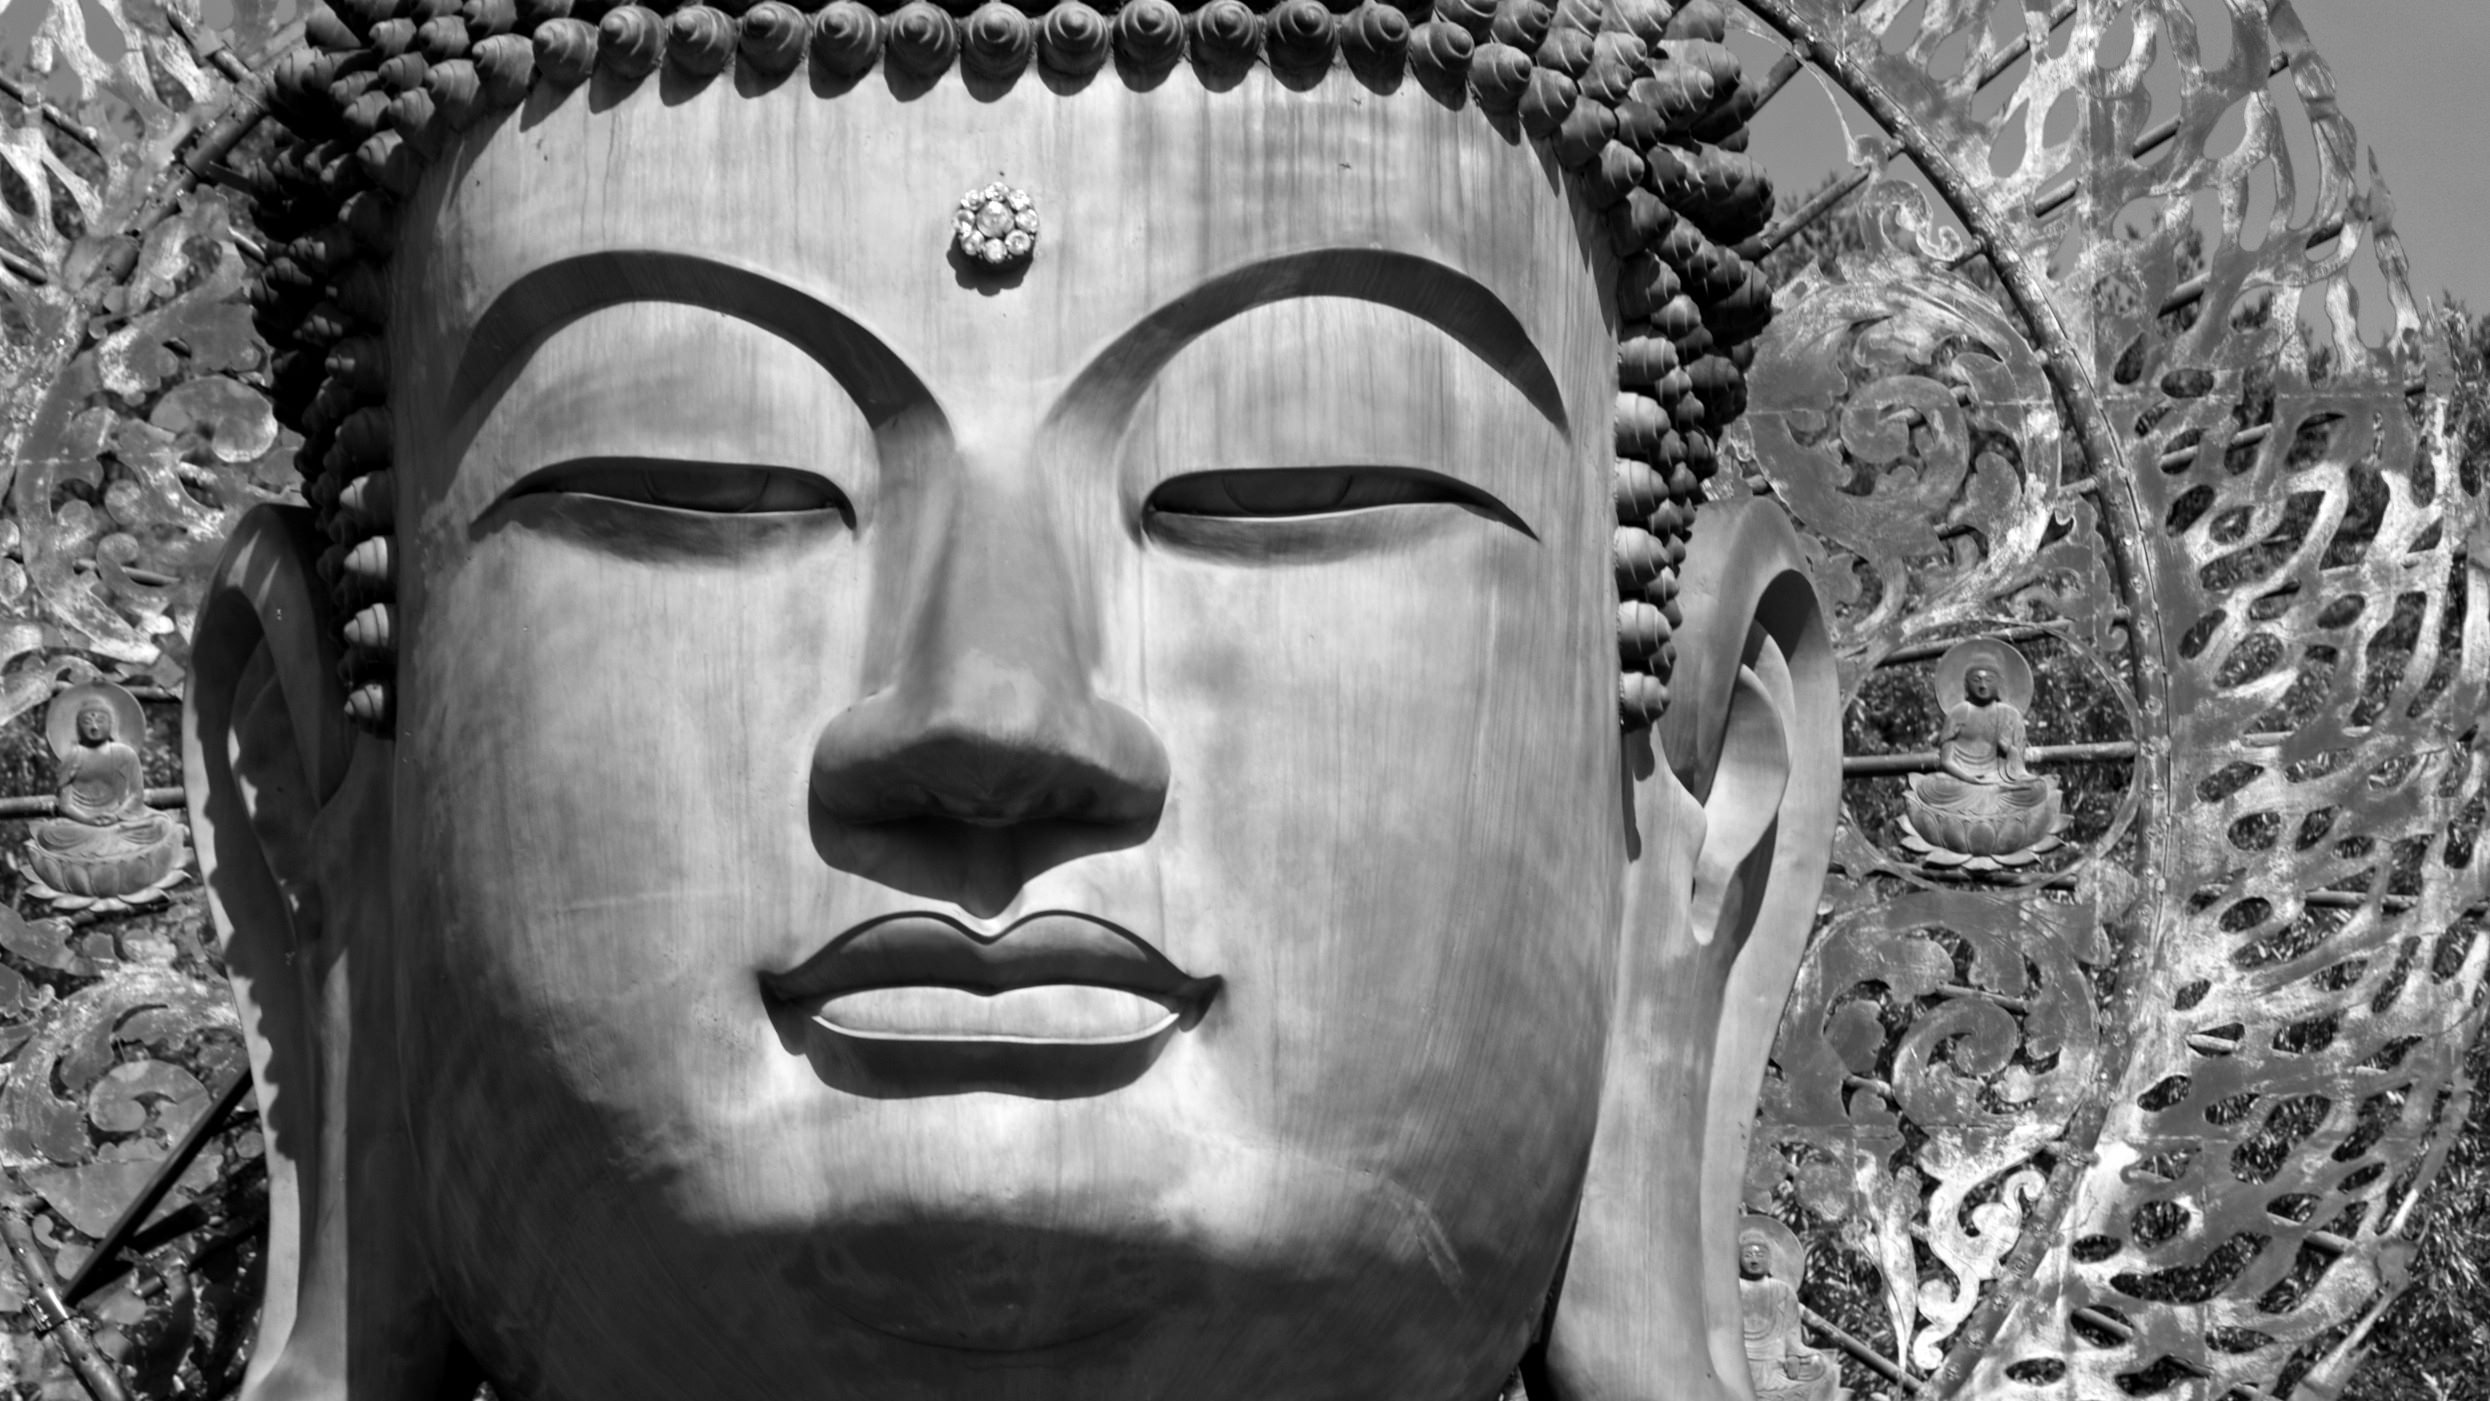 Расы для будды. Будда Шакьямуни голова. Сиддхартха Гаутама. Будда в нирване. Нирвана буддизм.